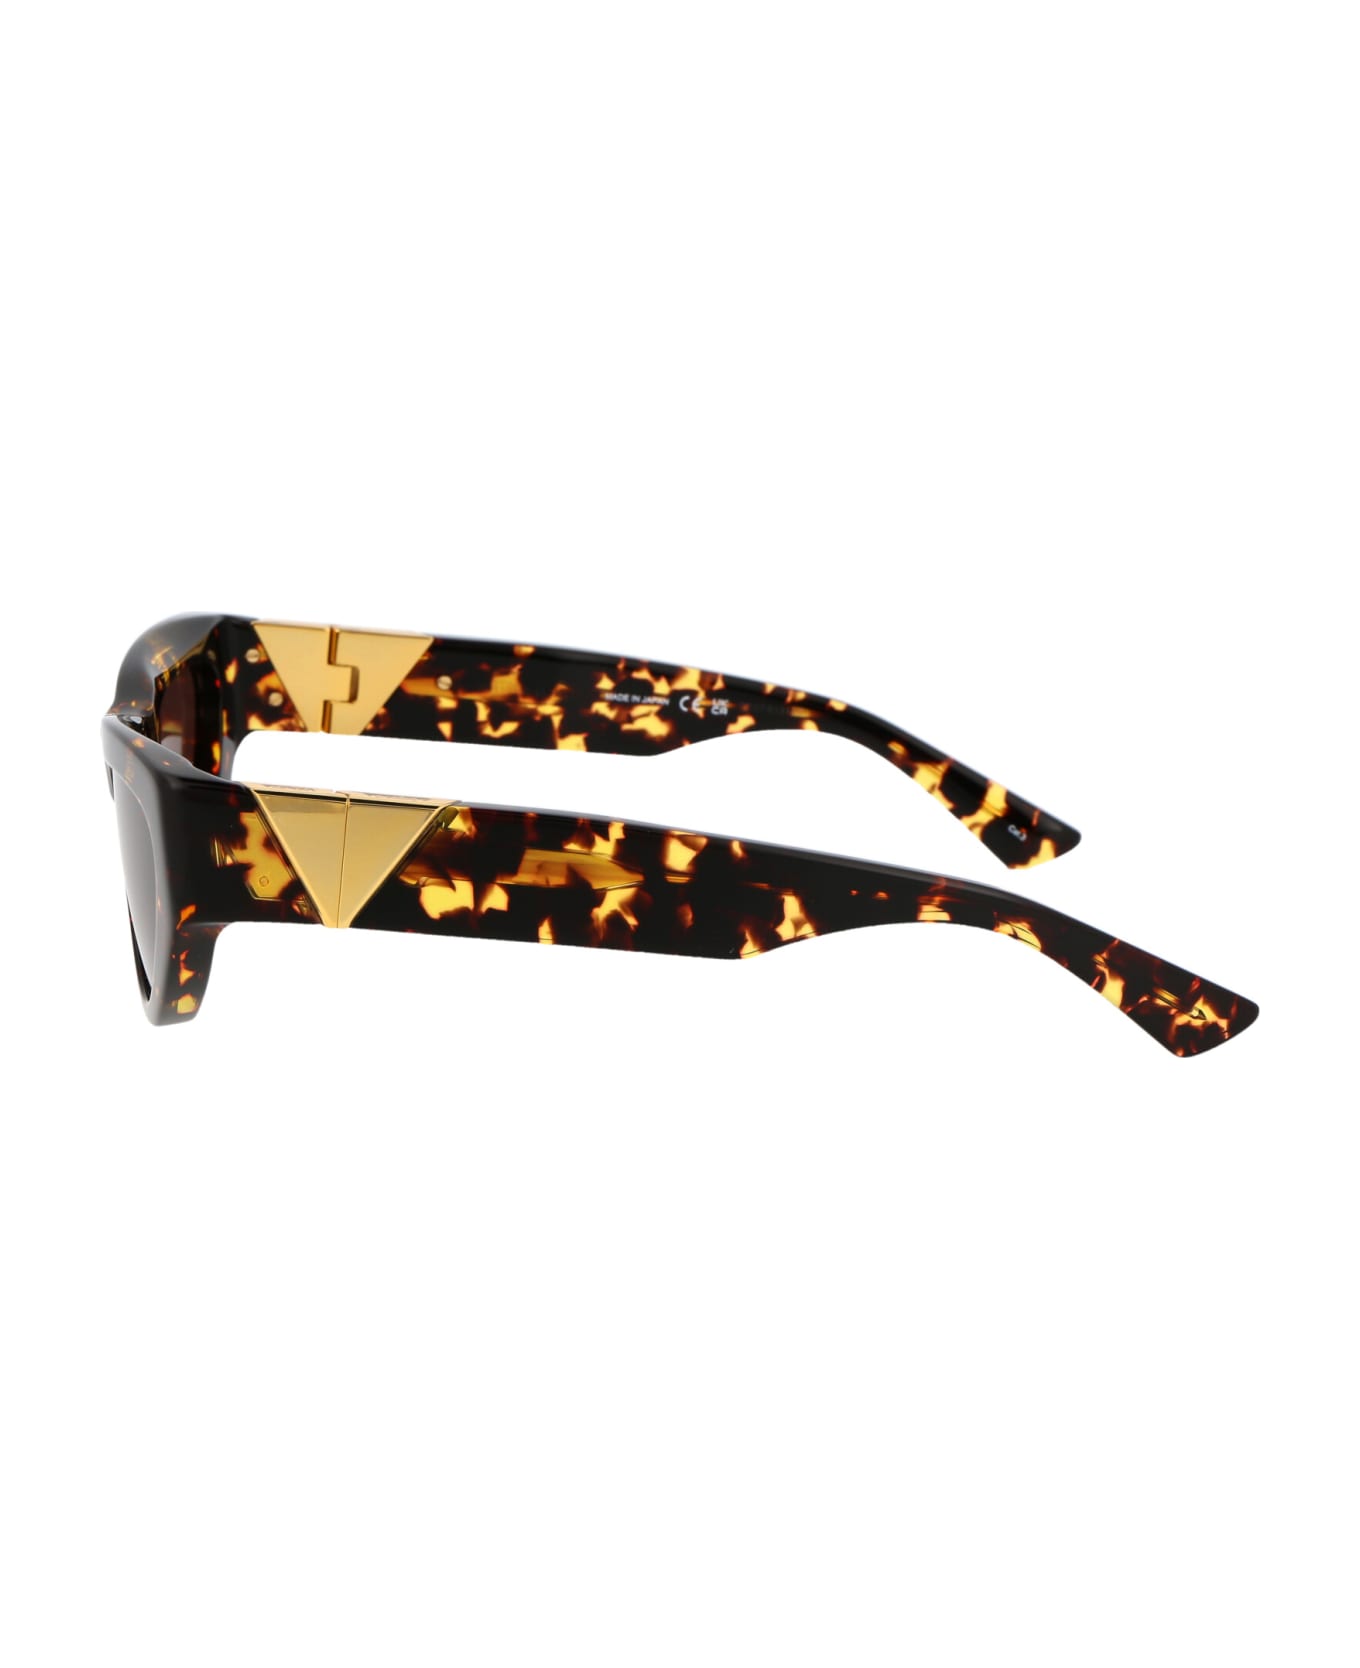 Bottega Veneta Eyewear Bv1176s Sunglasses - 002 HAVANA HAVANA BROWN サングラス